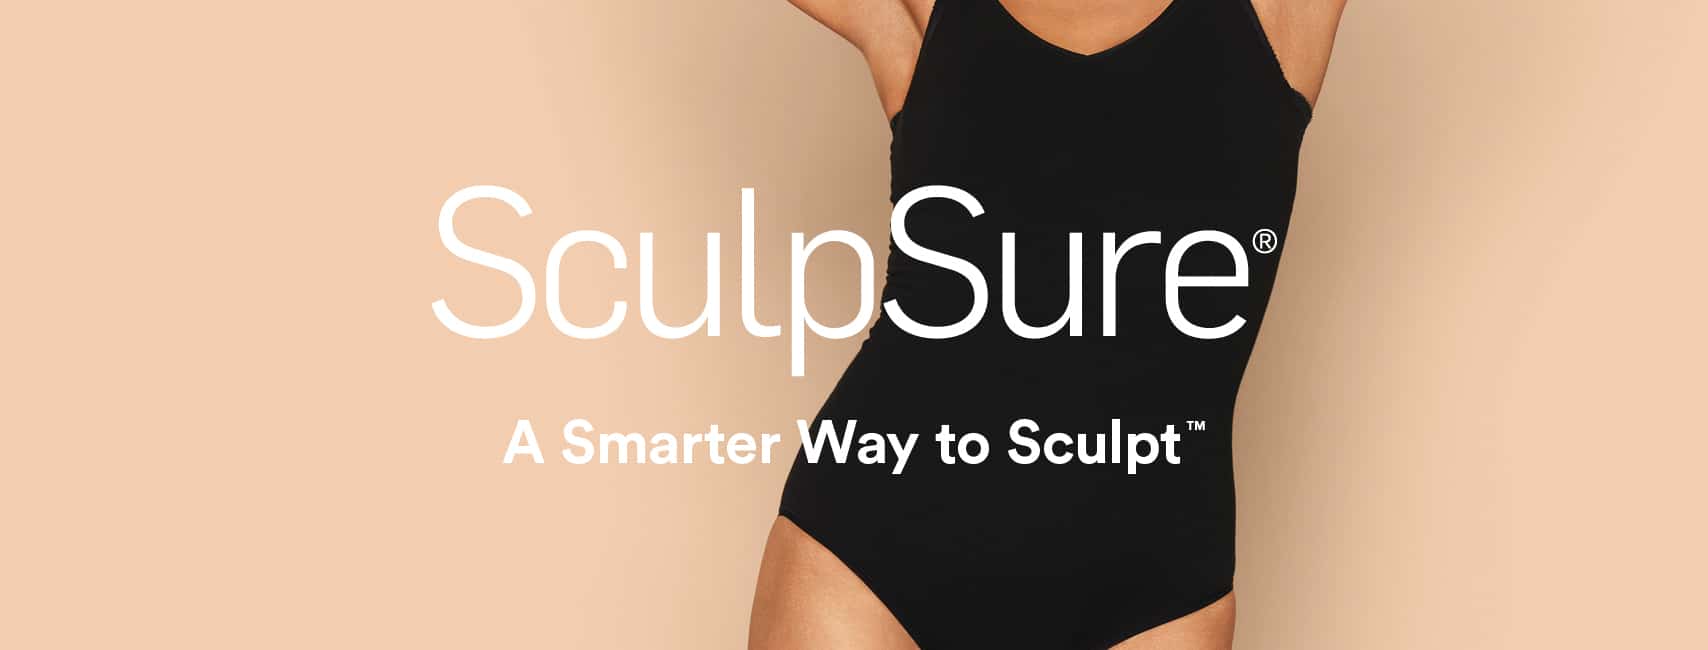 Sculpsure - A smarter way to Sculpt